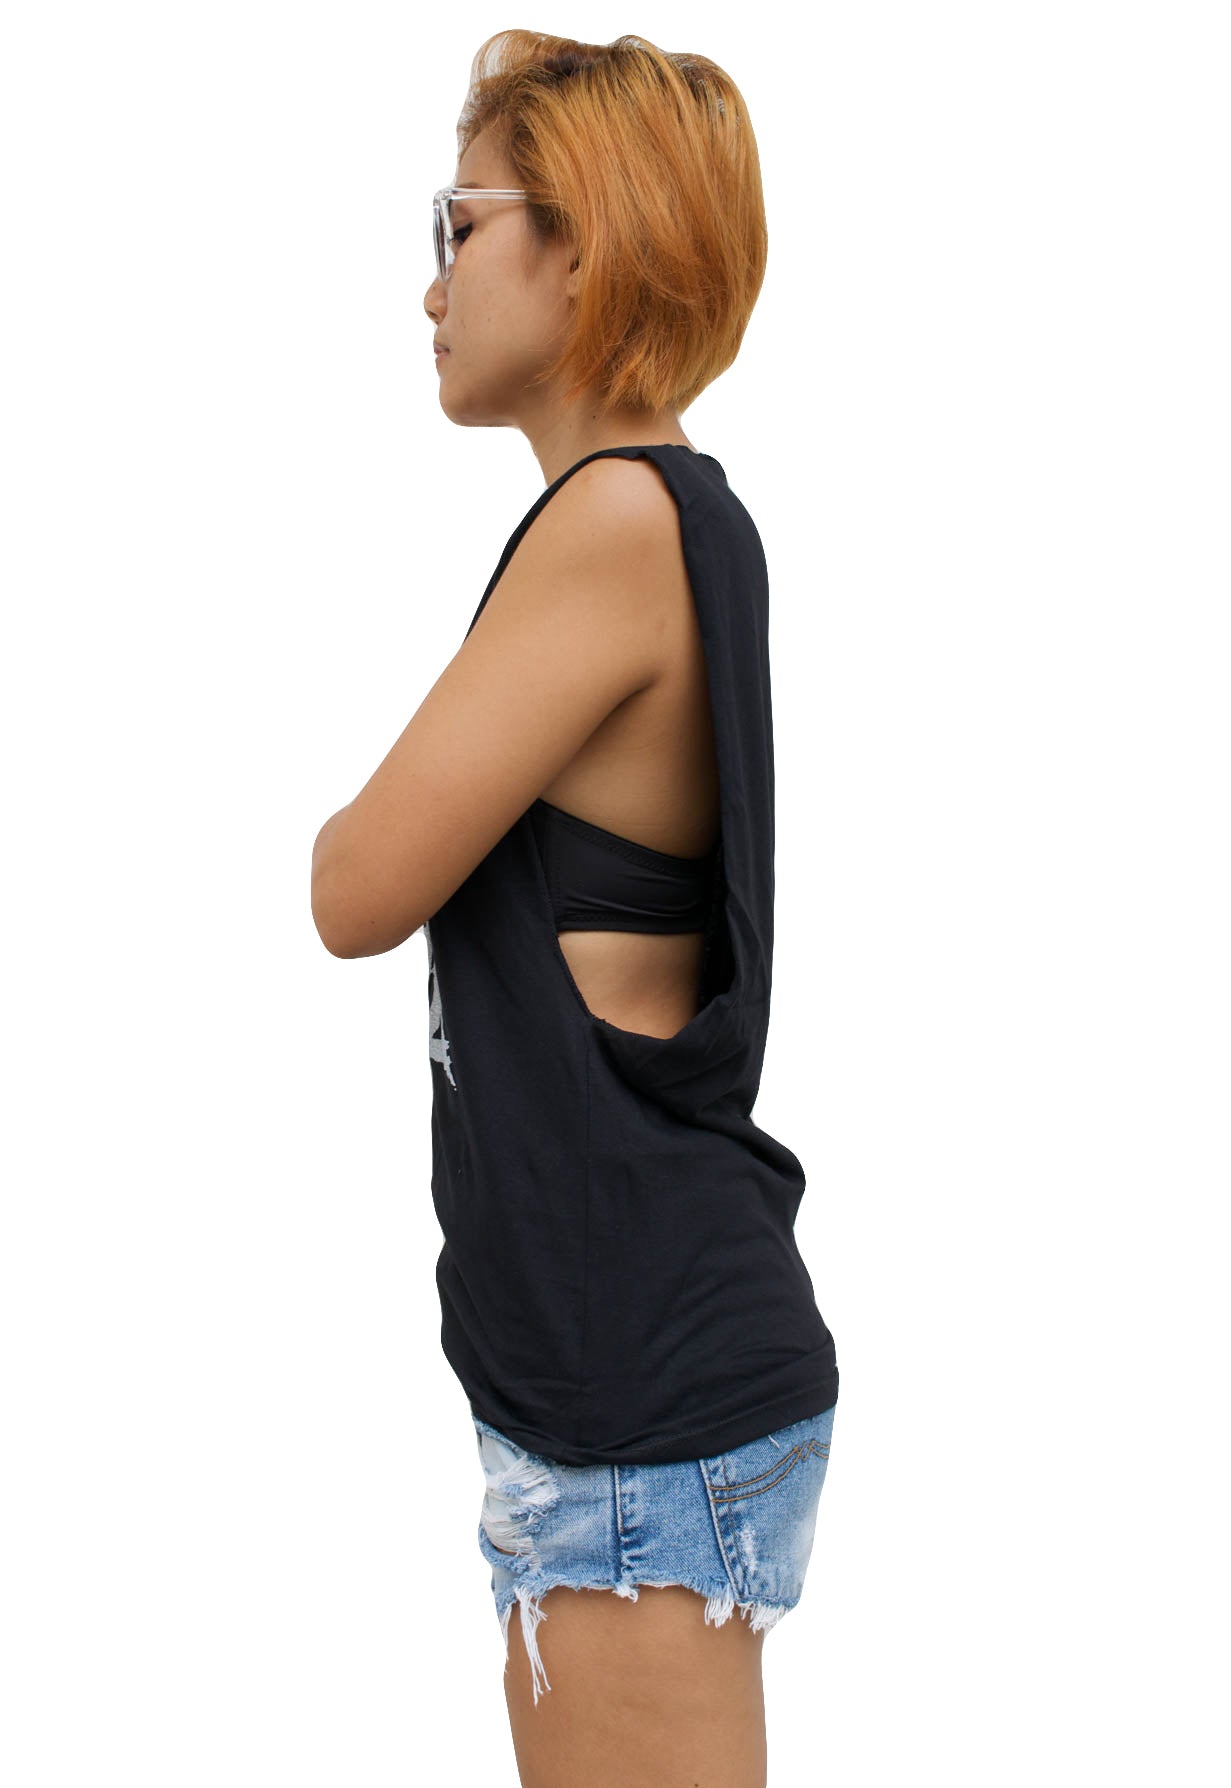 Ladies Nickelback Vest Tank-Top Singlet Sleeveless T-Shirt